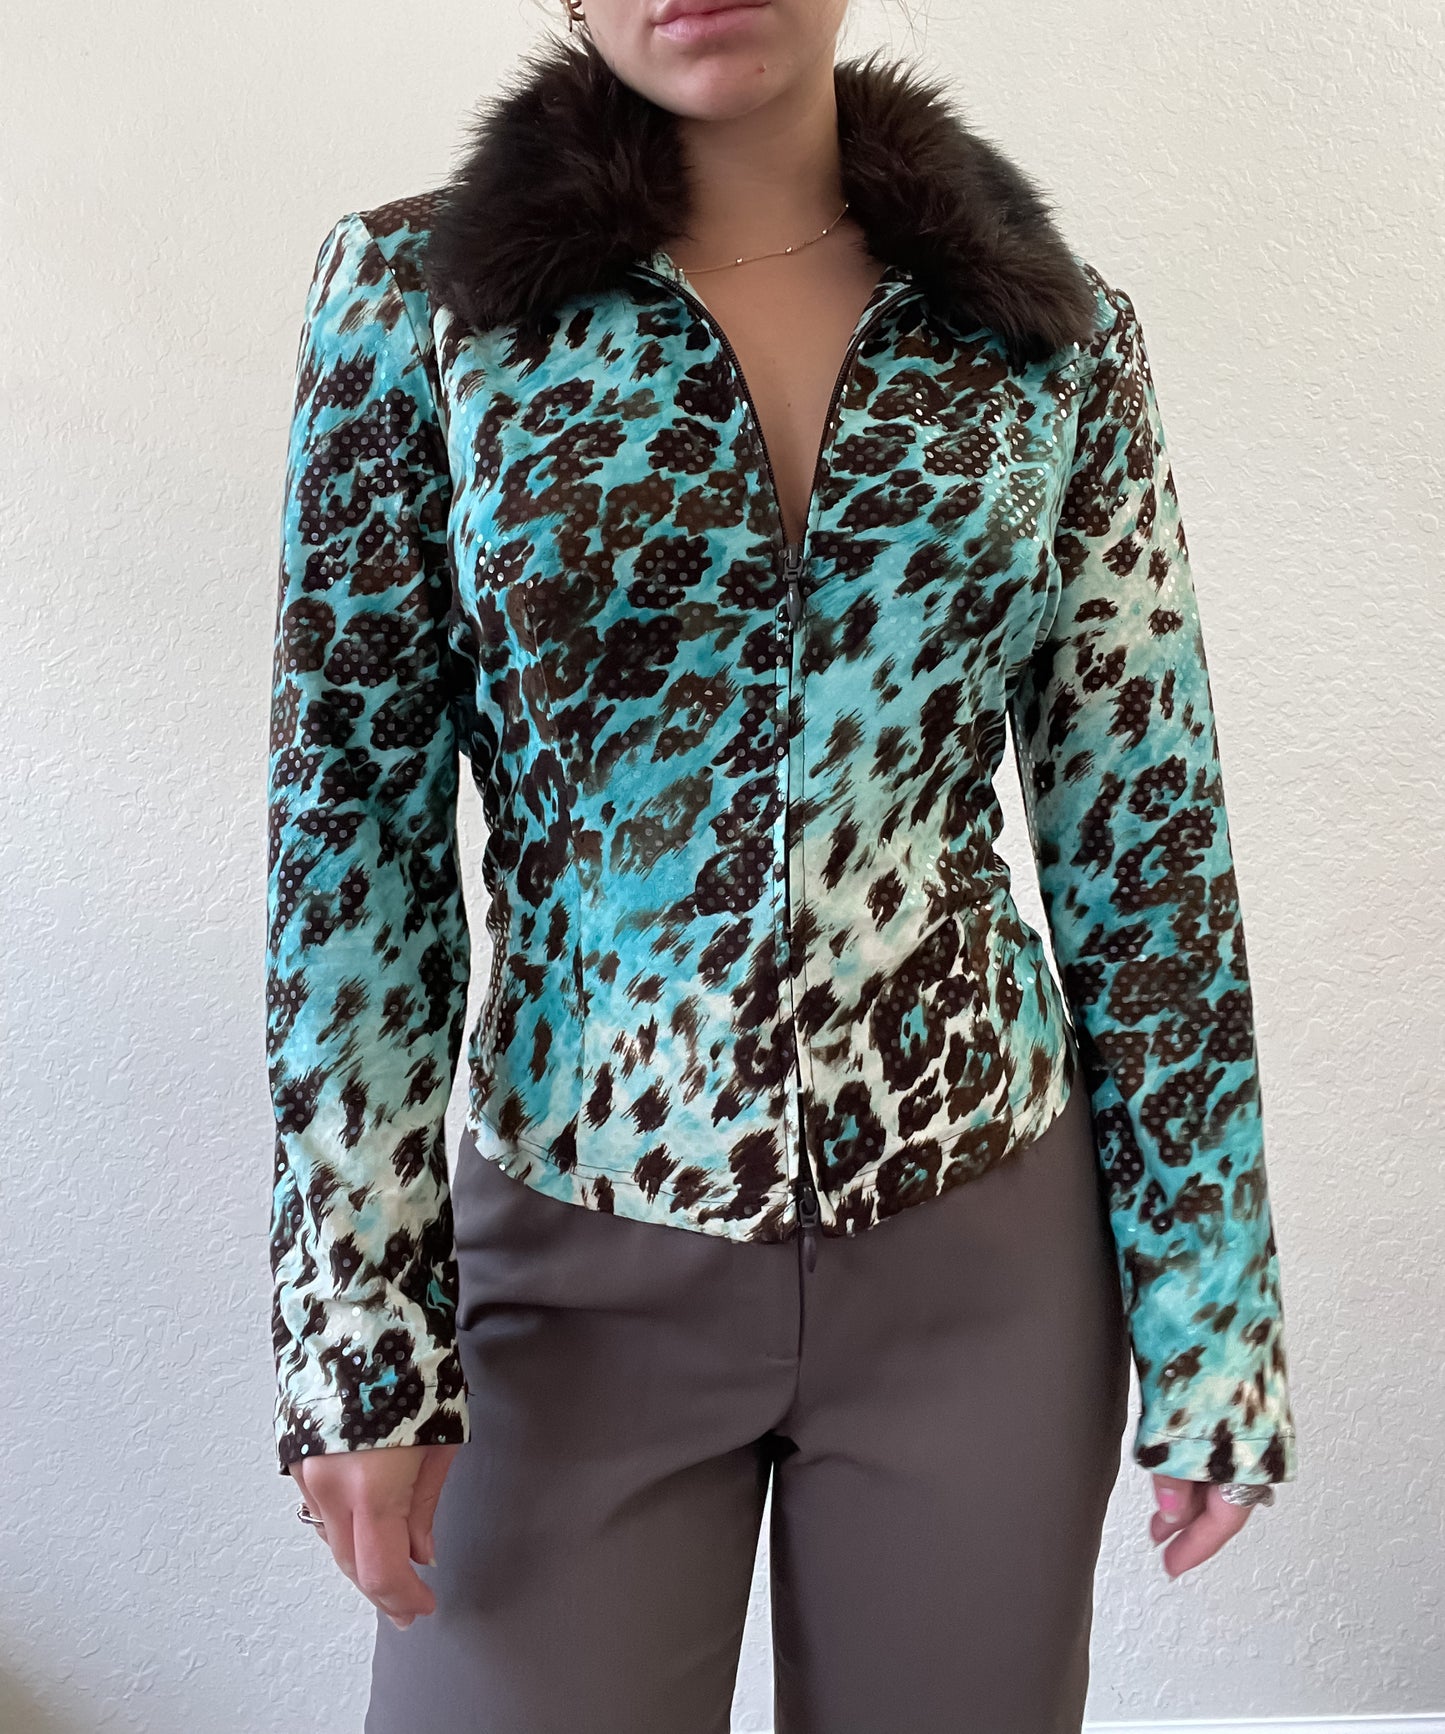 Leopard fur lined jacket